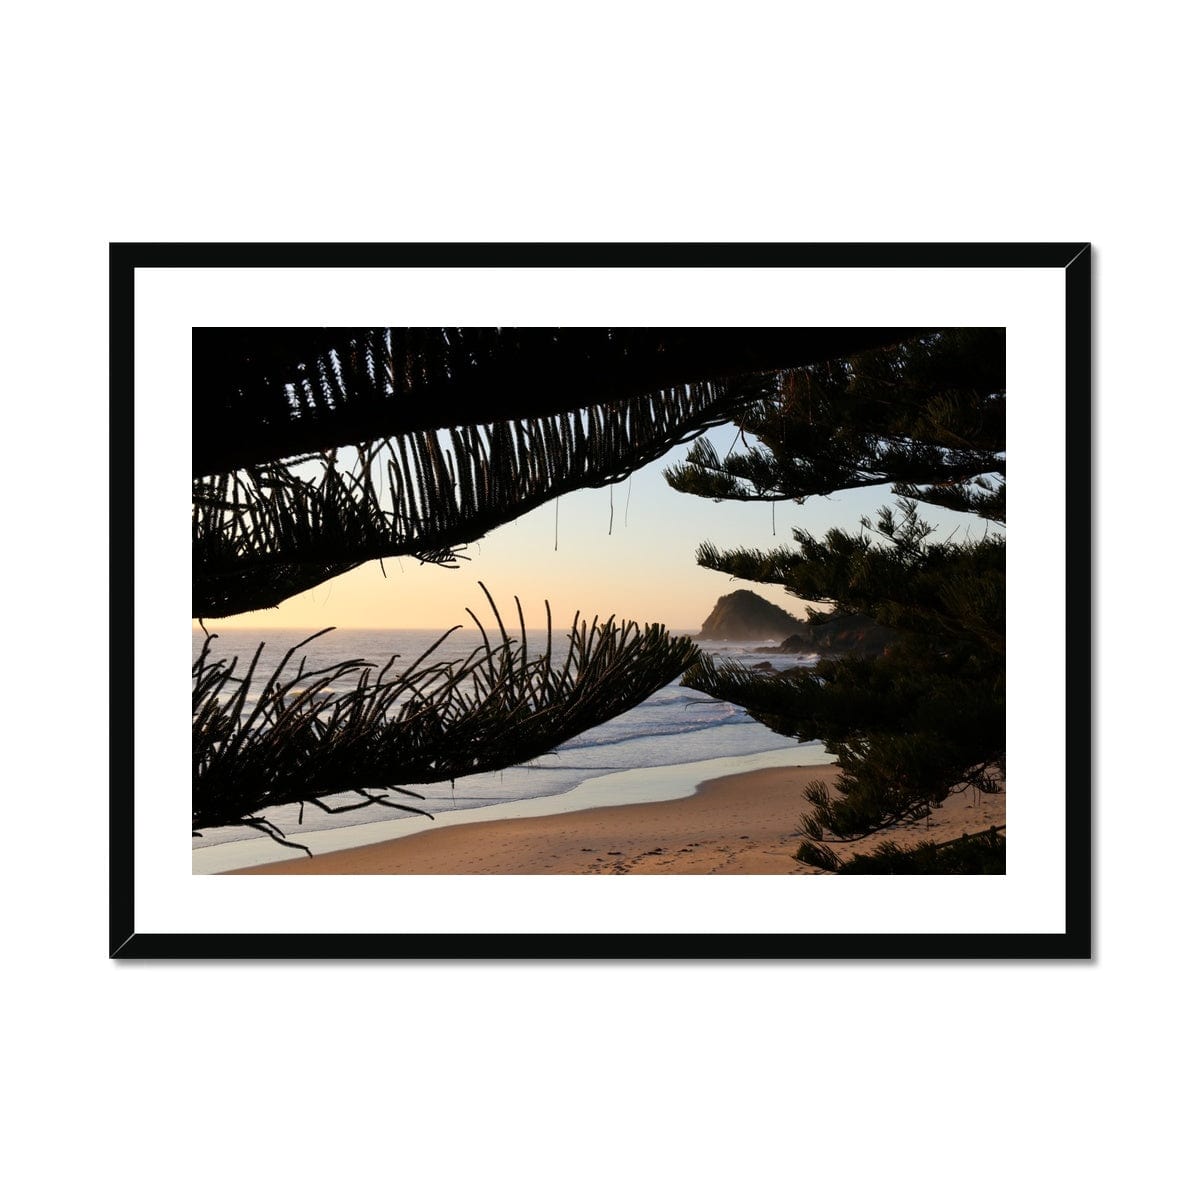 Adam Davies Framed A4 Landscape (29x21cm) / Black Frame Flynns Beach Port Macquarie Framed Print